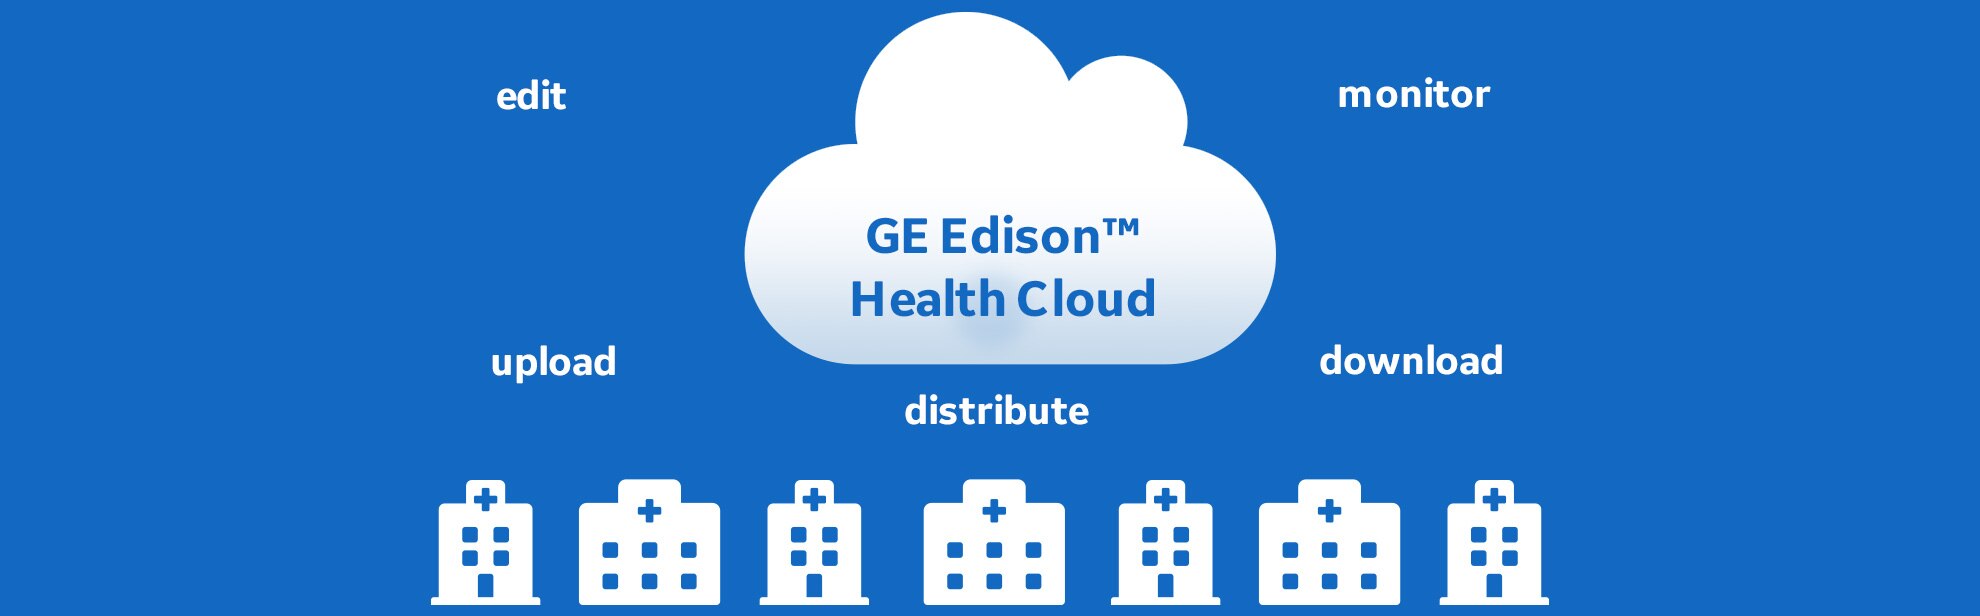 GE-Edison-video-image